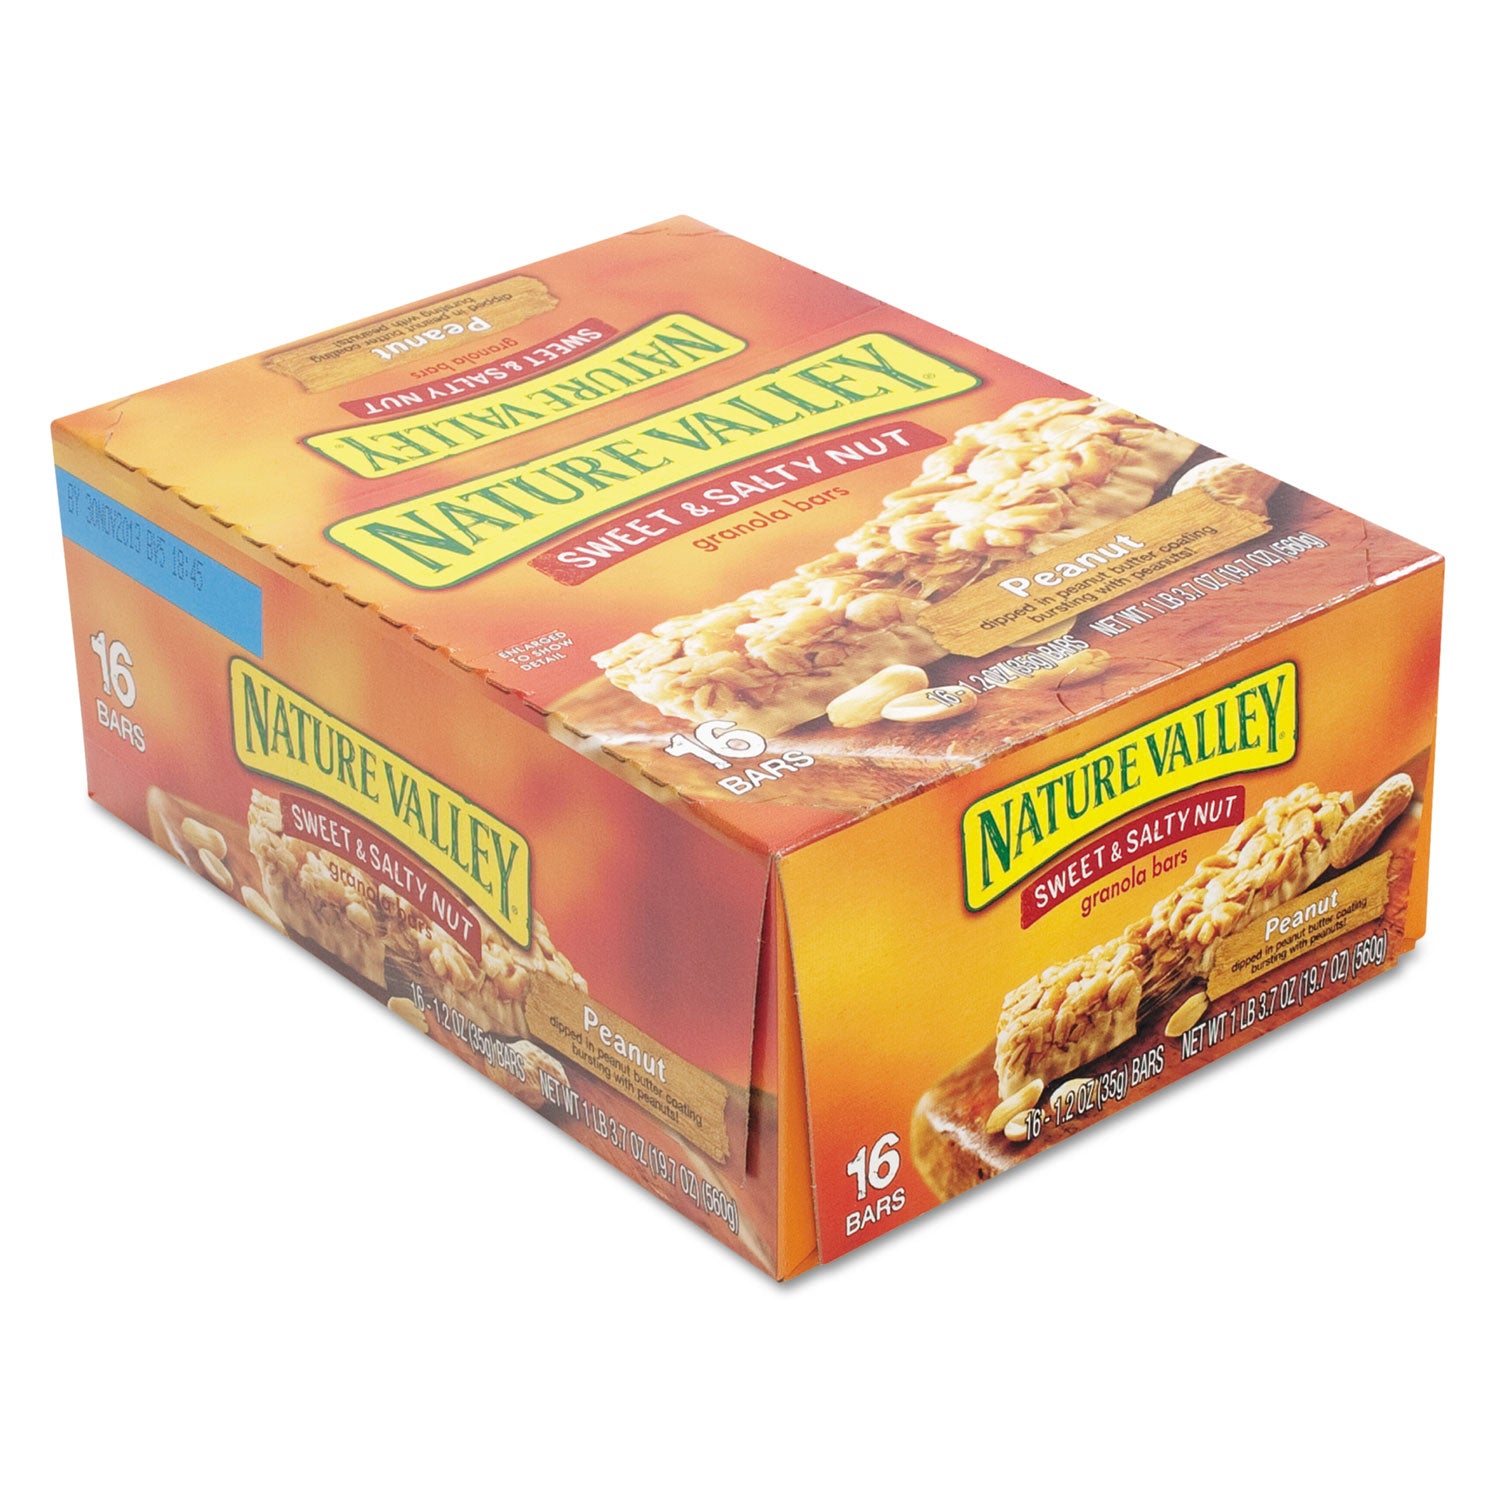 granola-bars-sweet-and-salty-nut-peanut-cereal-12-oz-bar-16-box_avtsn42067 - 3